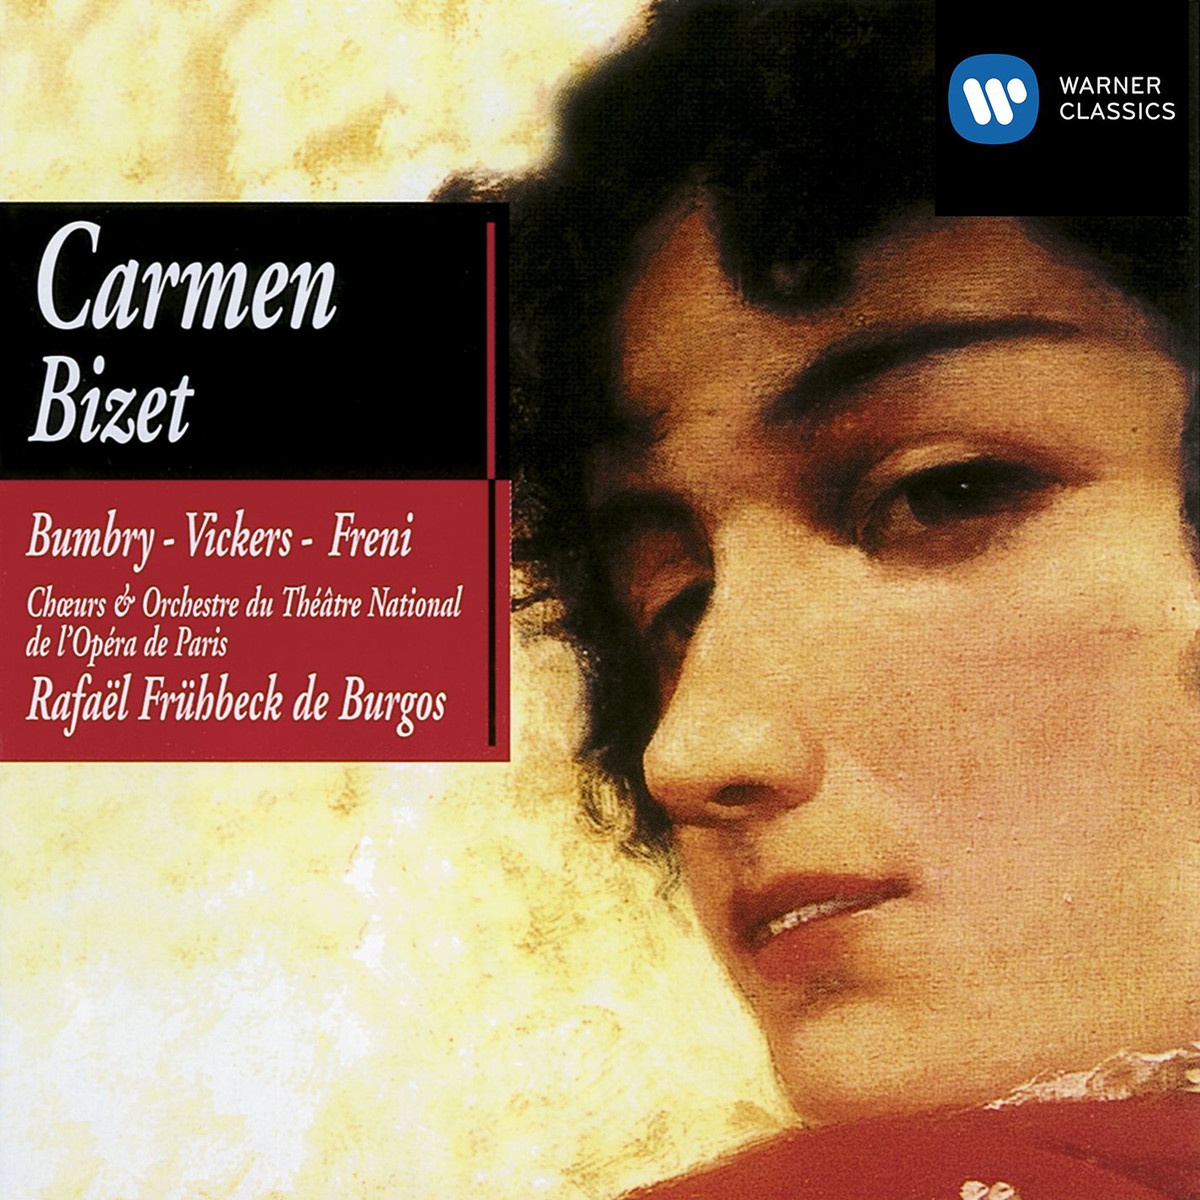 Carmen (1990 Digital Remaster), ACT 1: A la prison